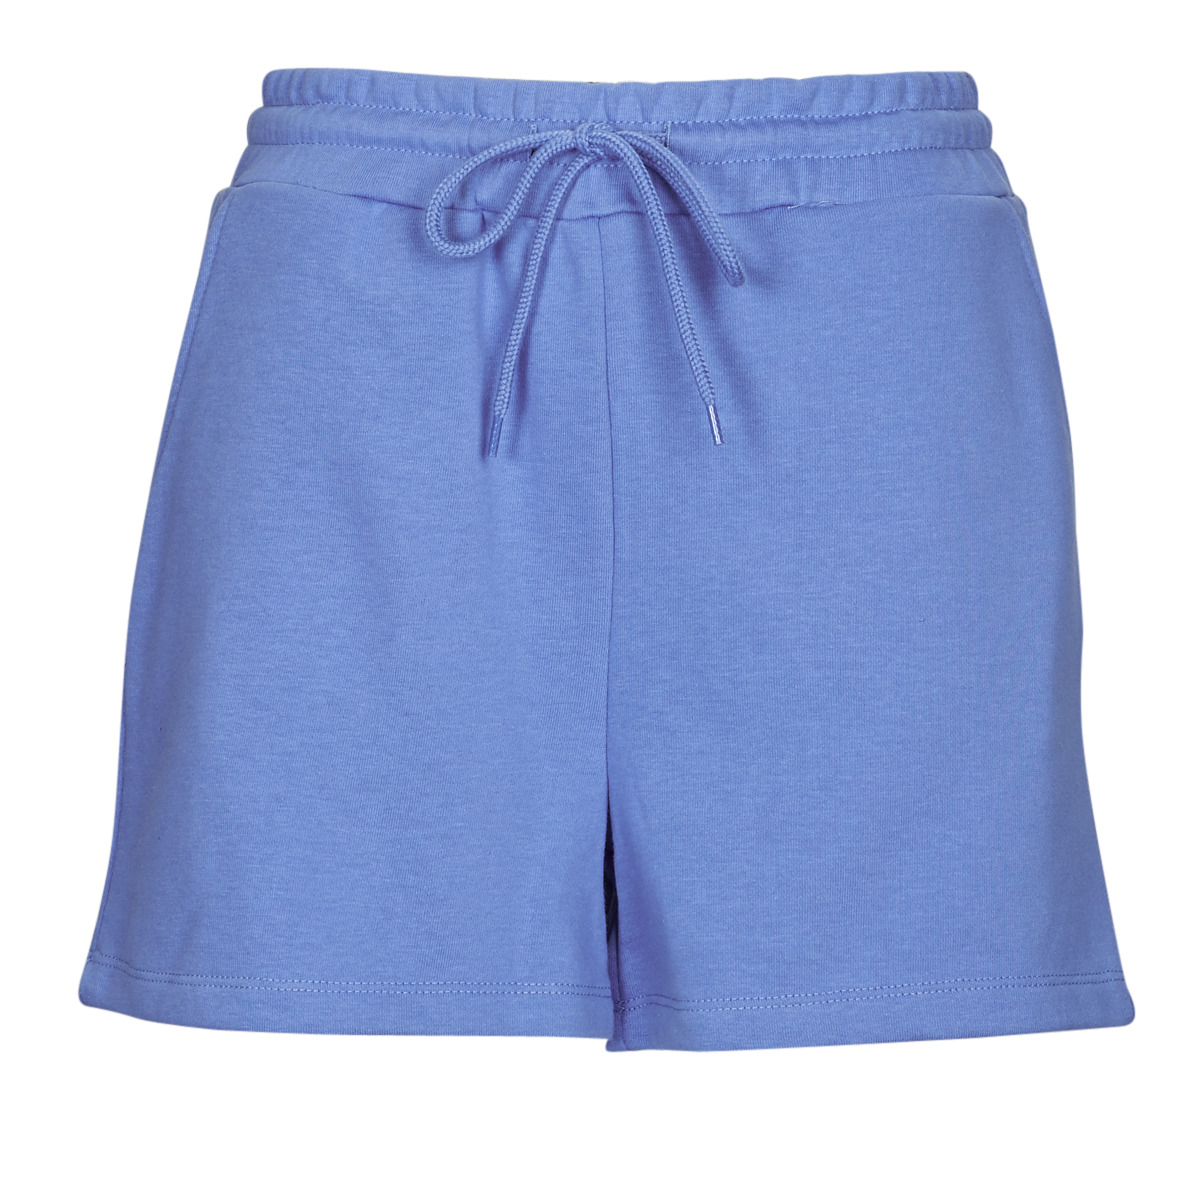 textil Mujer Shorts / Bermudas Pieces PCCHILLI SUMMER HW SHORTS Azul